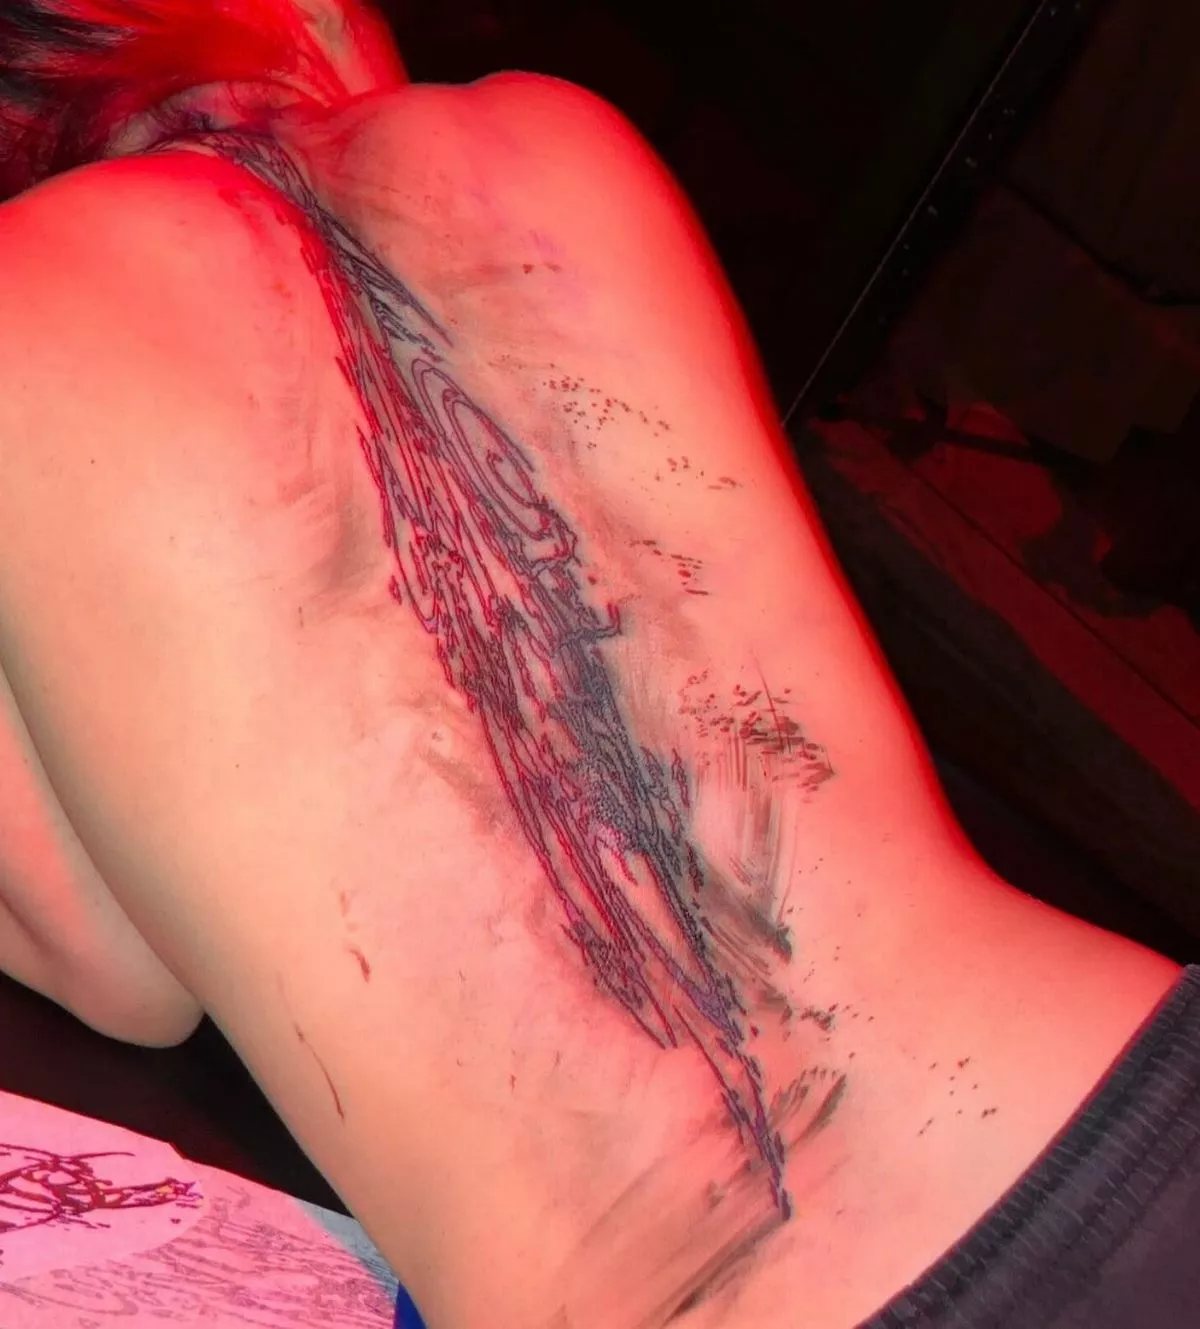 Billie Eilish reveals massive hidden tattoo in topless photo 2